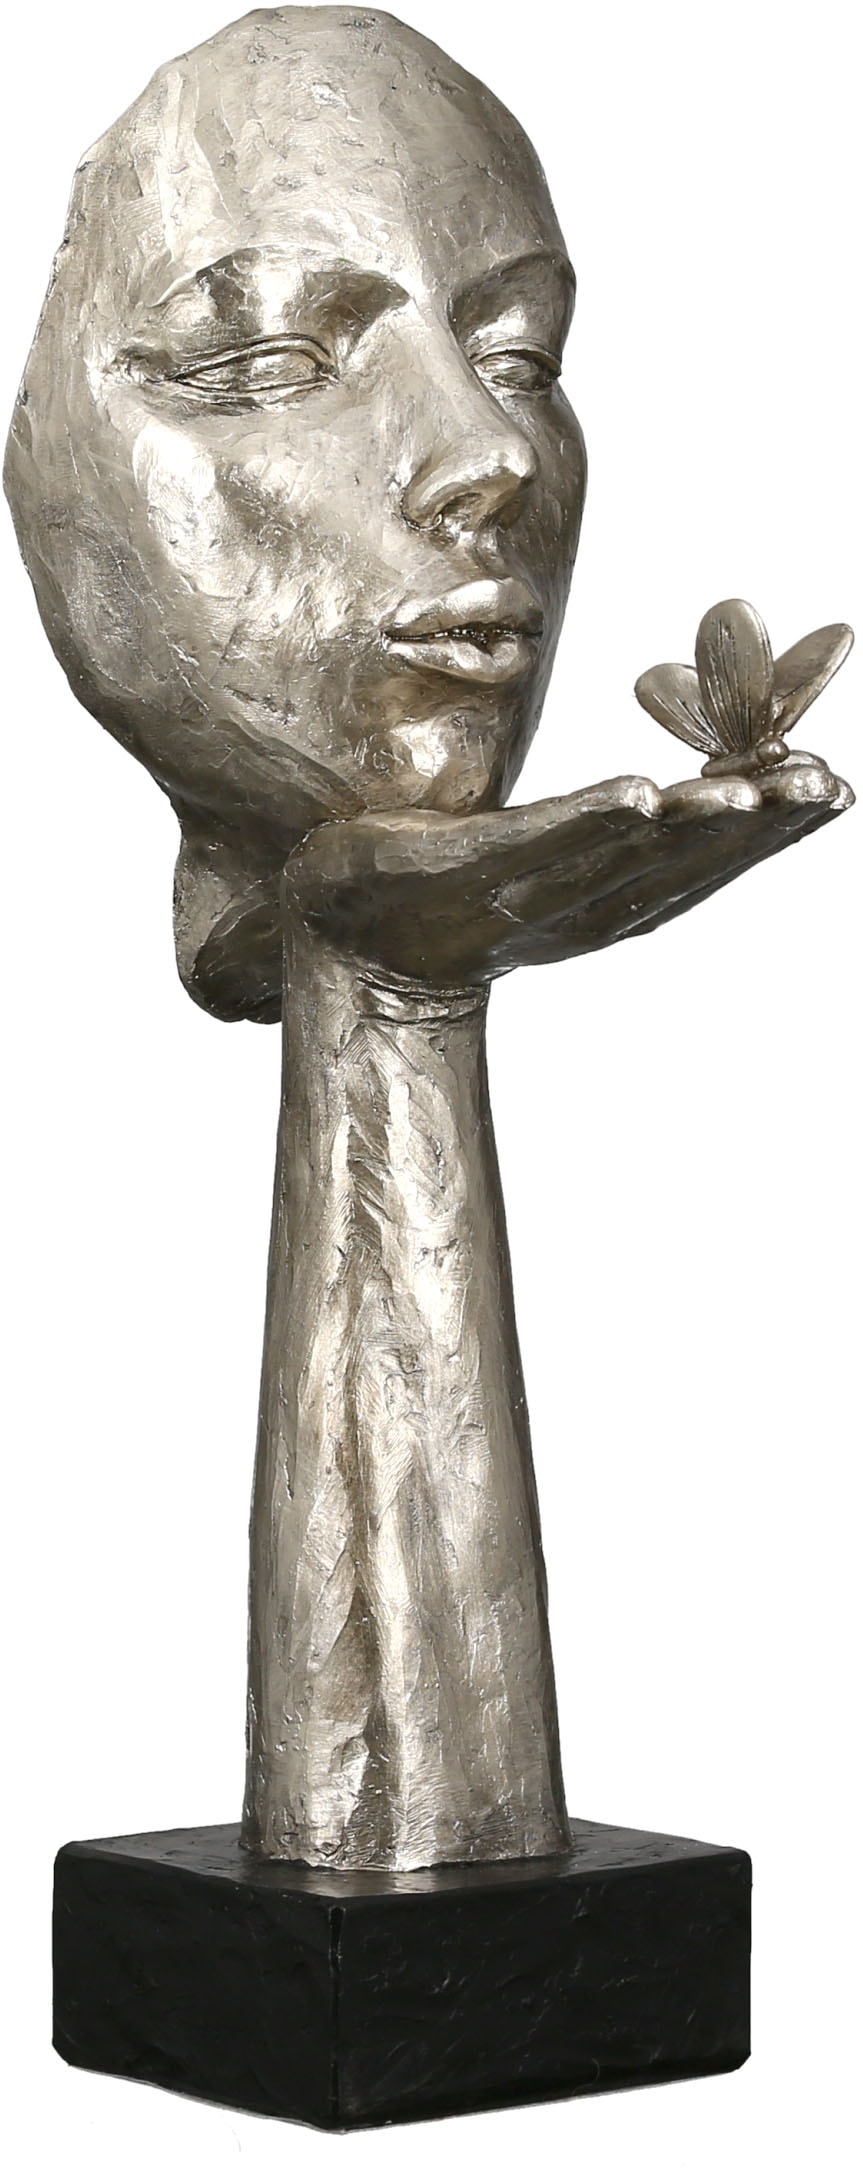 GILDE Dekofigur »Skulptur Desire, Polyresin antikfinish«, kaufen silberfarben